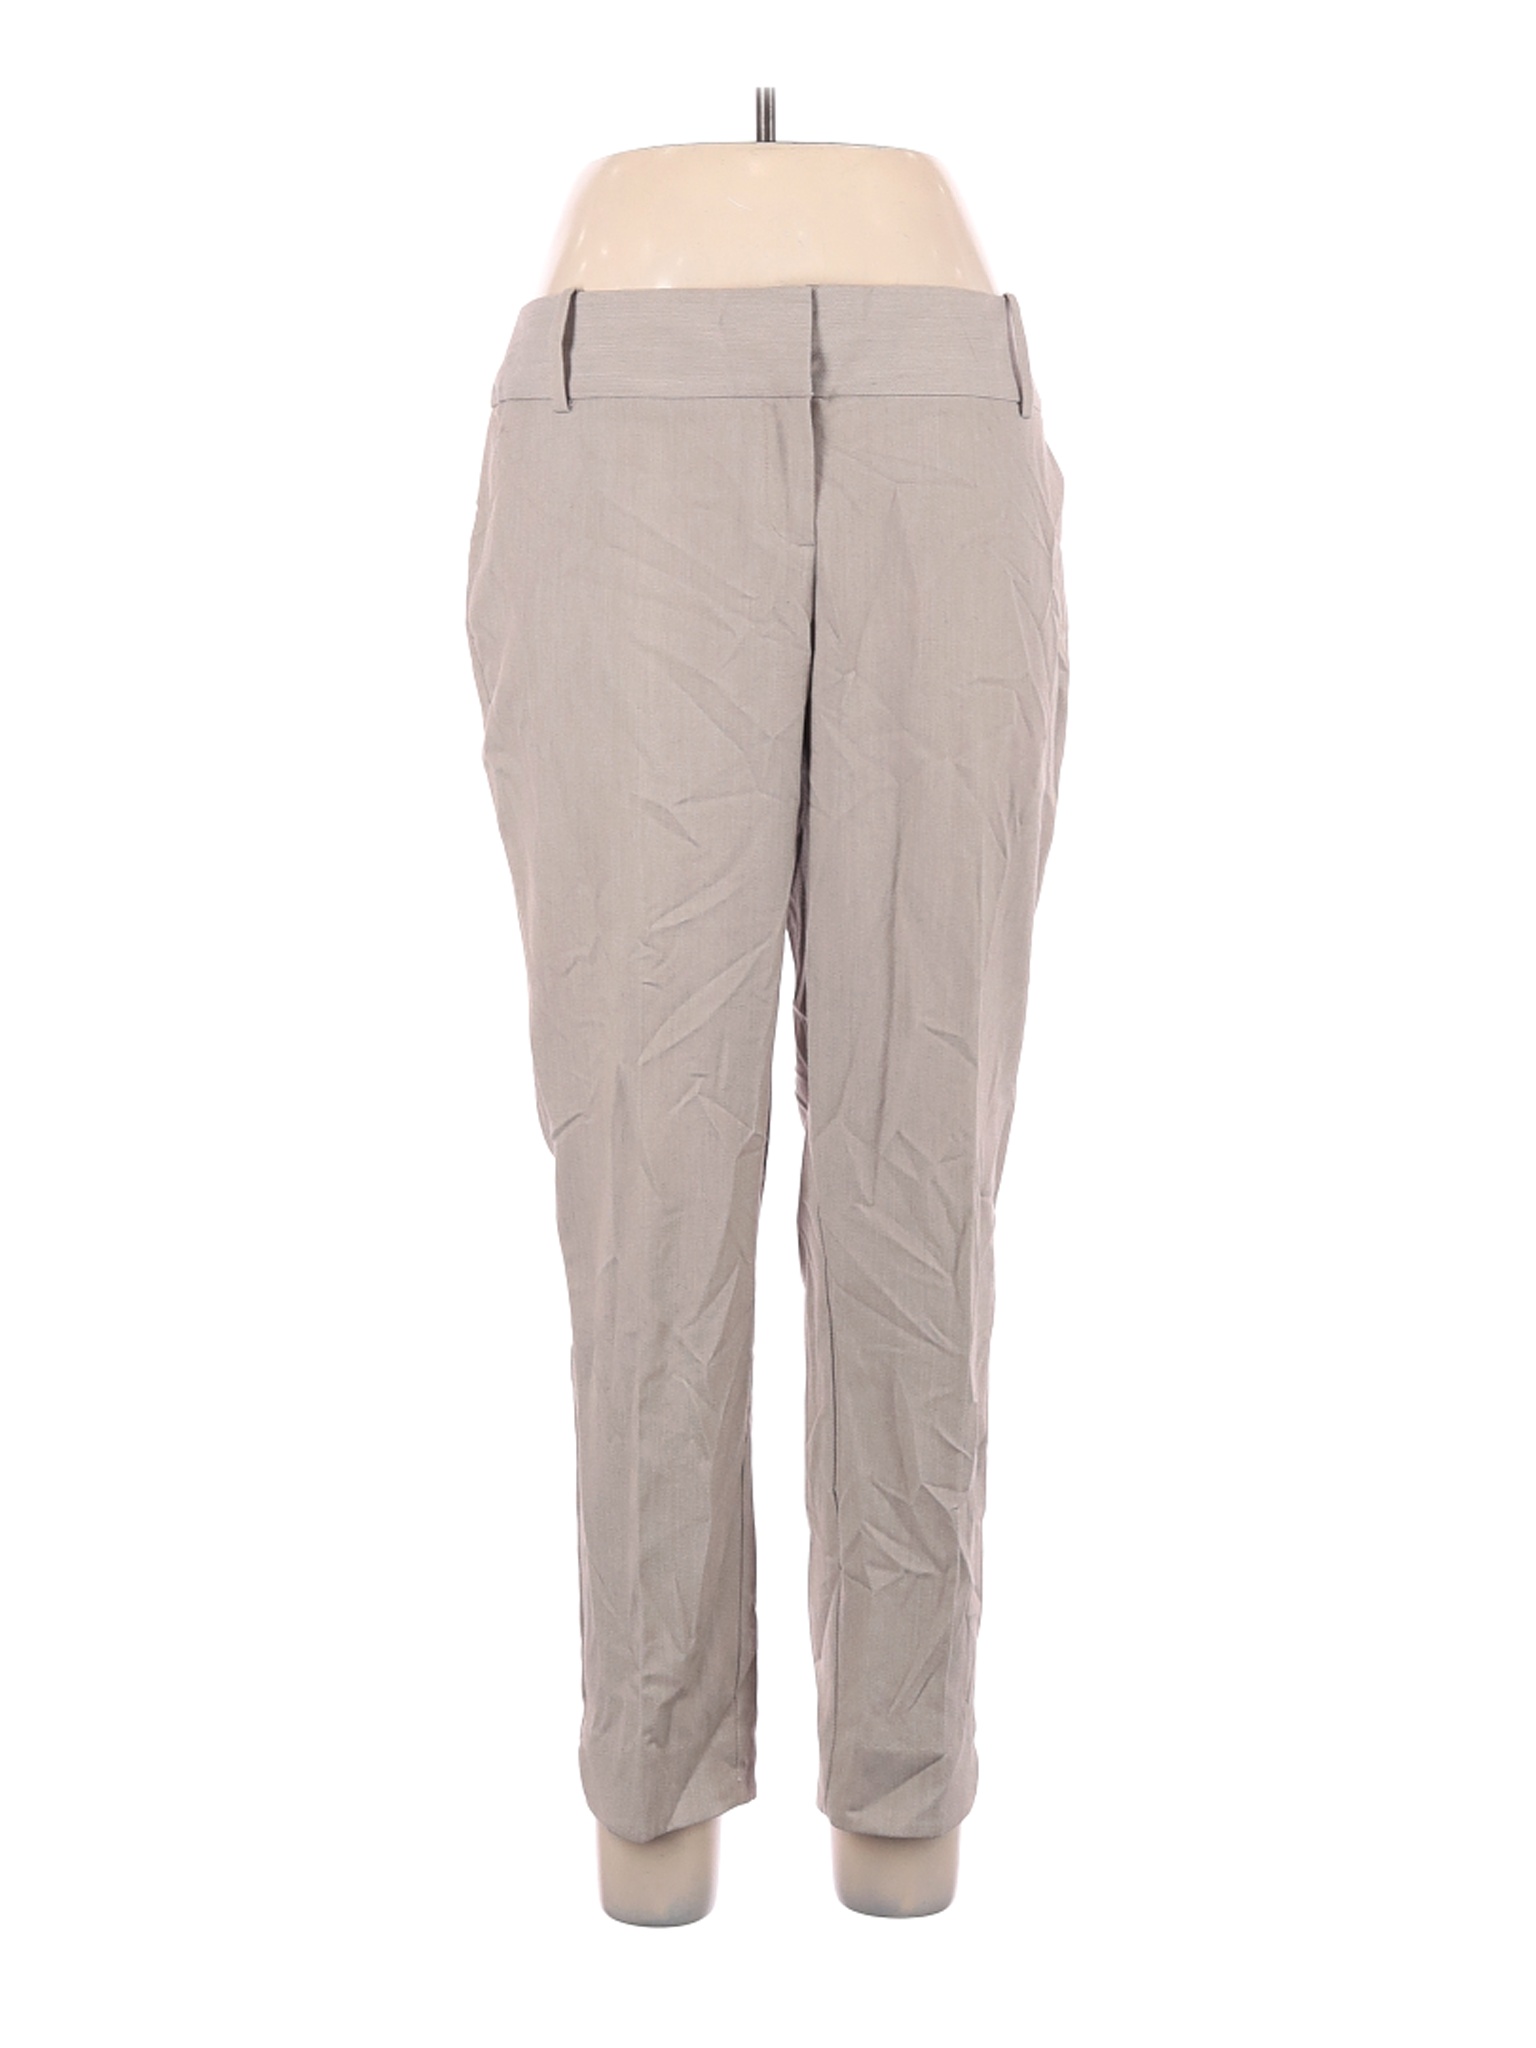 The Limited Women Ivory Dress Pants 10 | eBay